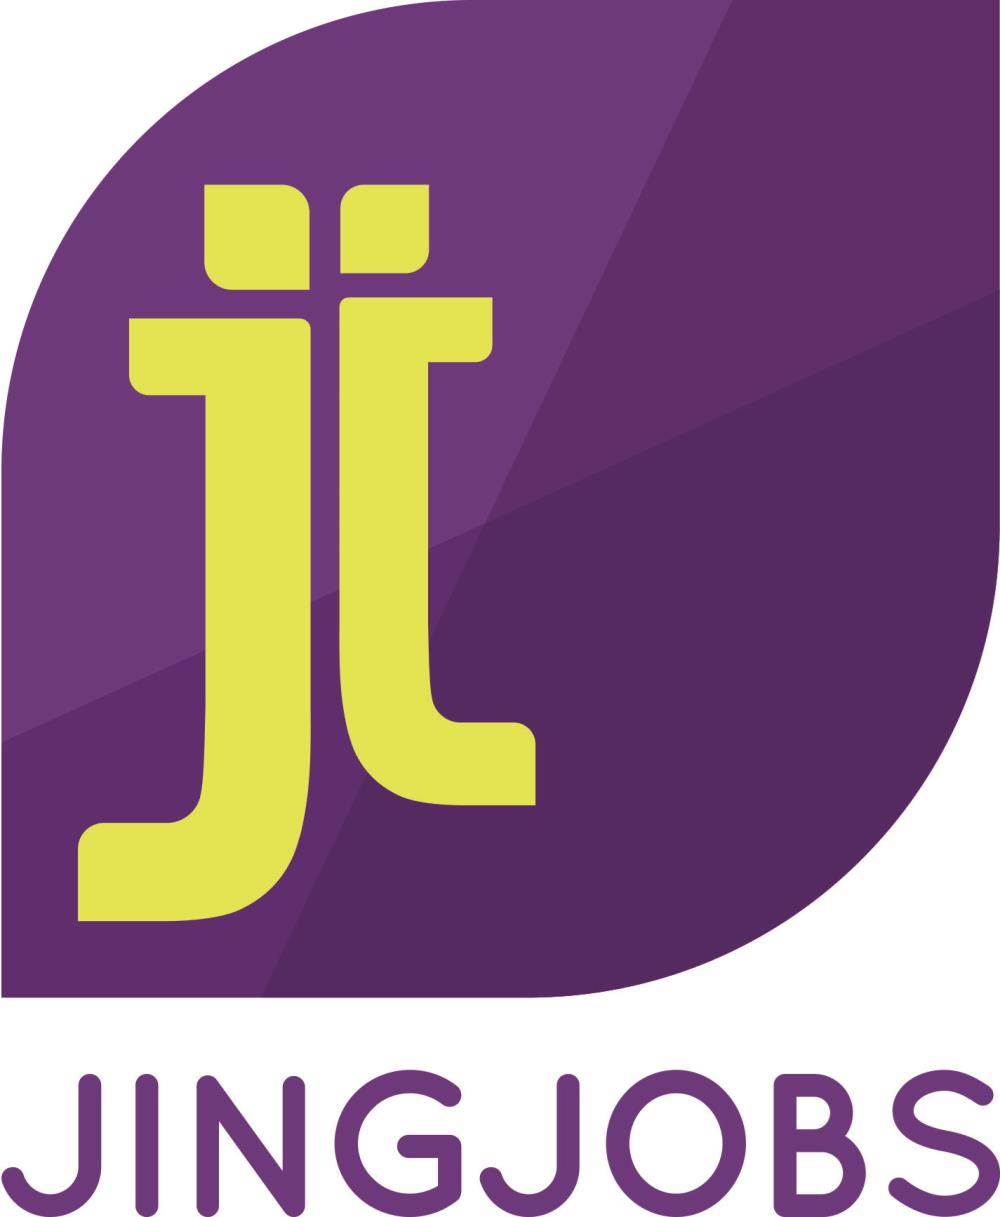 Jingjobs Logo.jpg